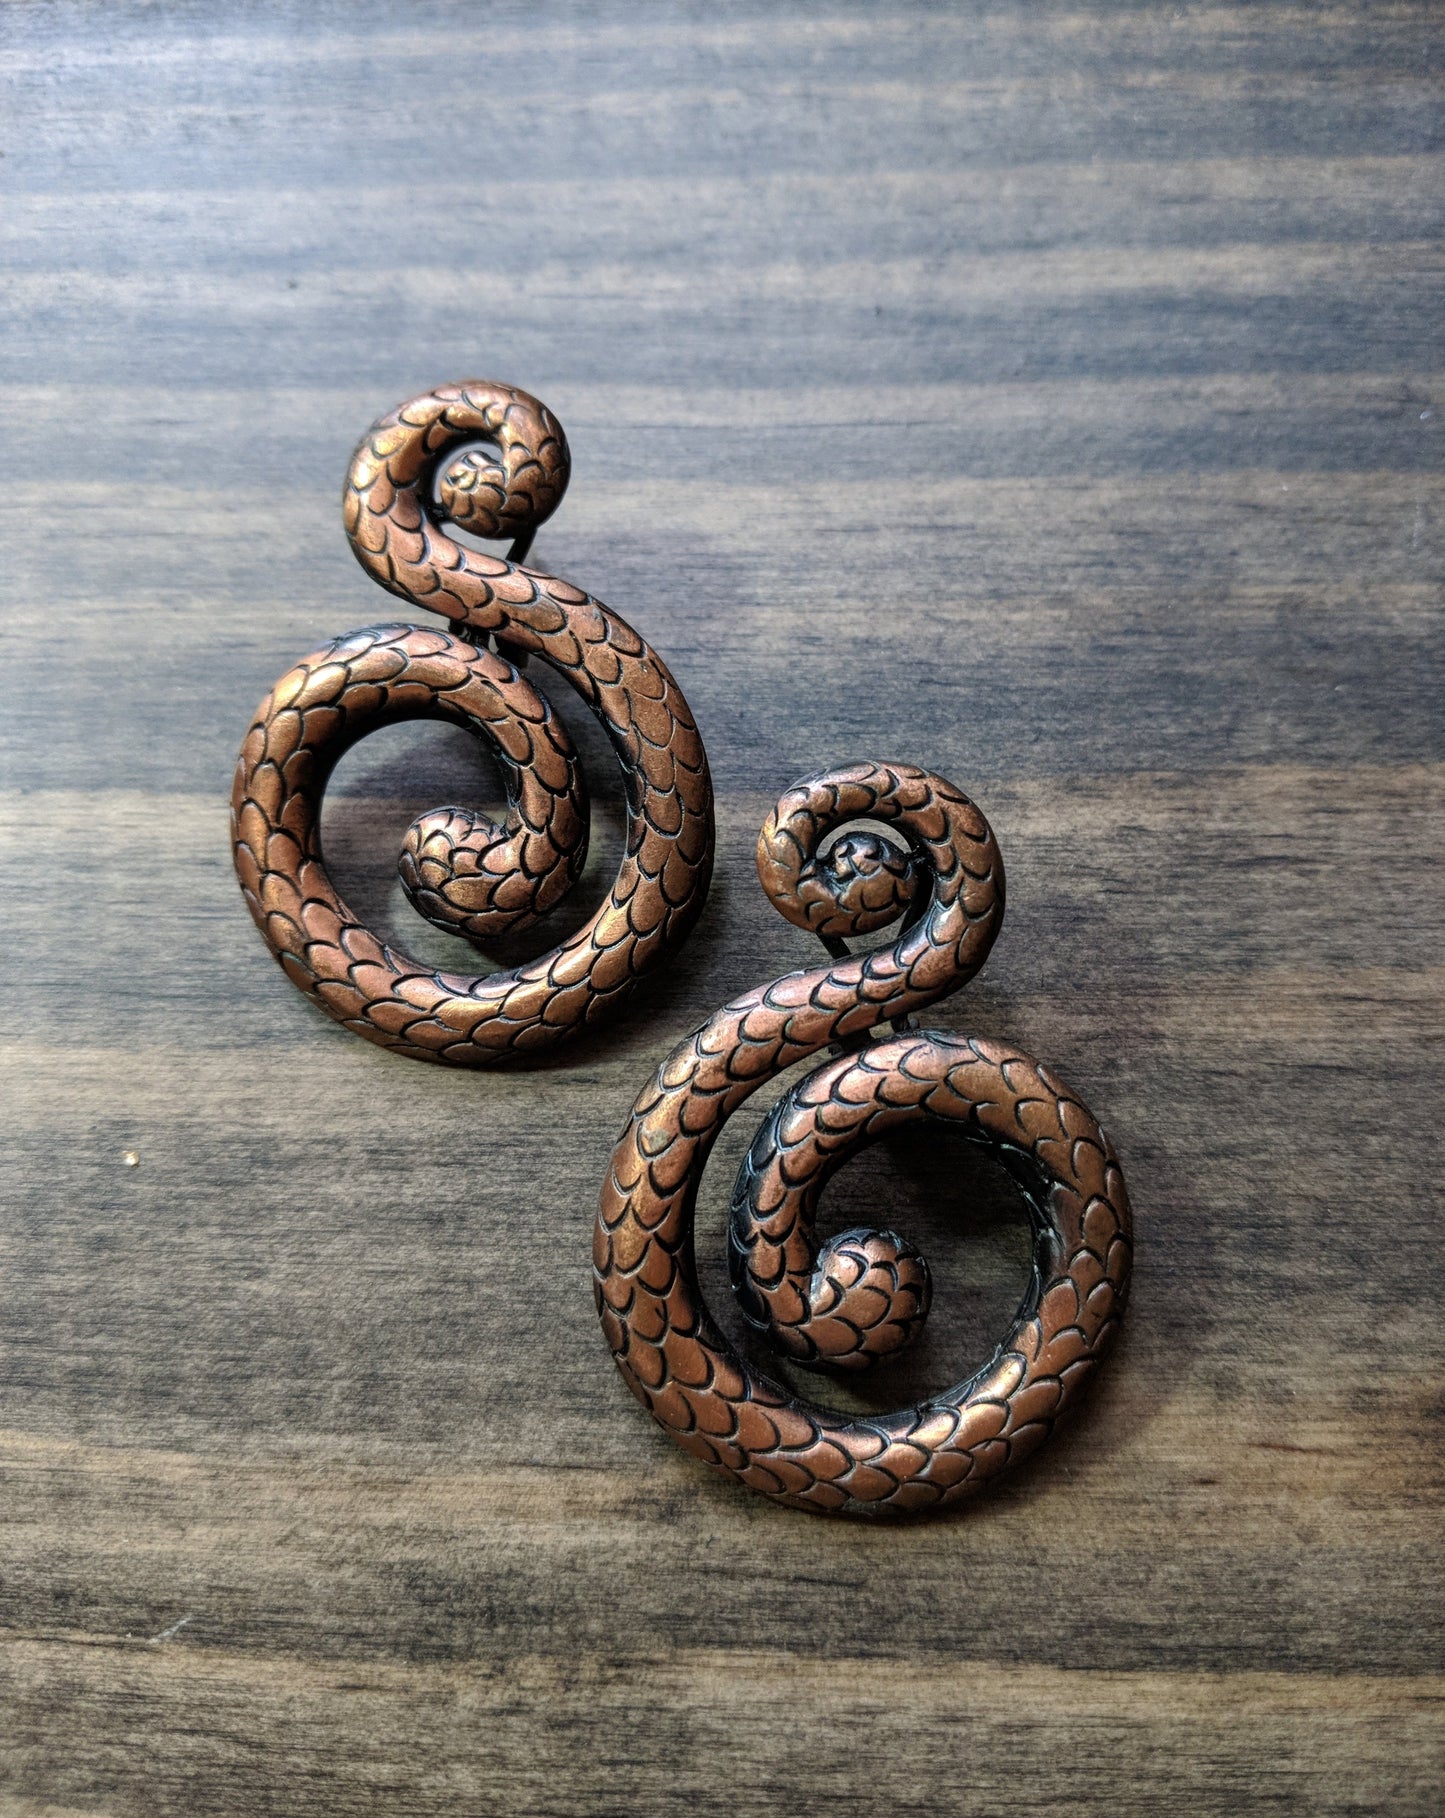 Bronze Colored Snake 'S' Earrings